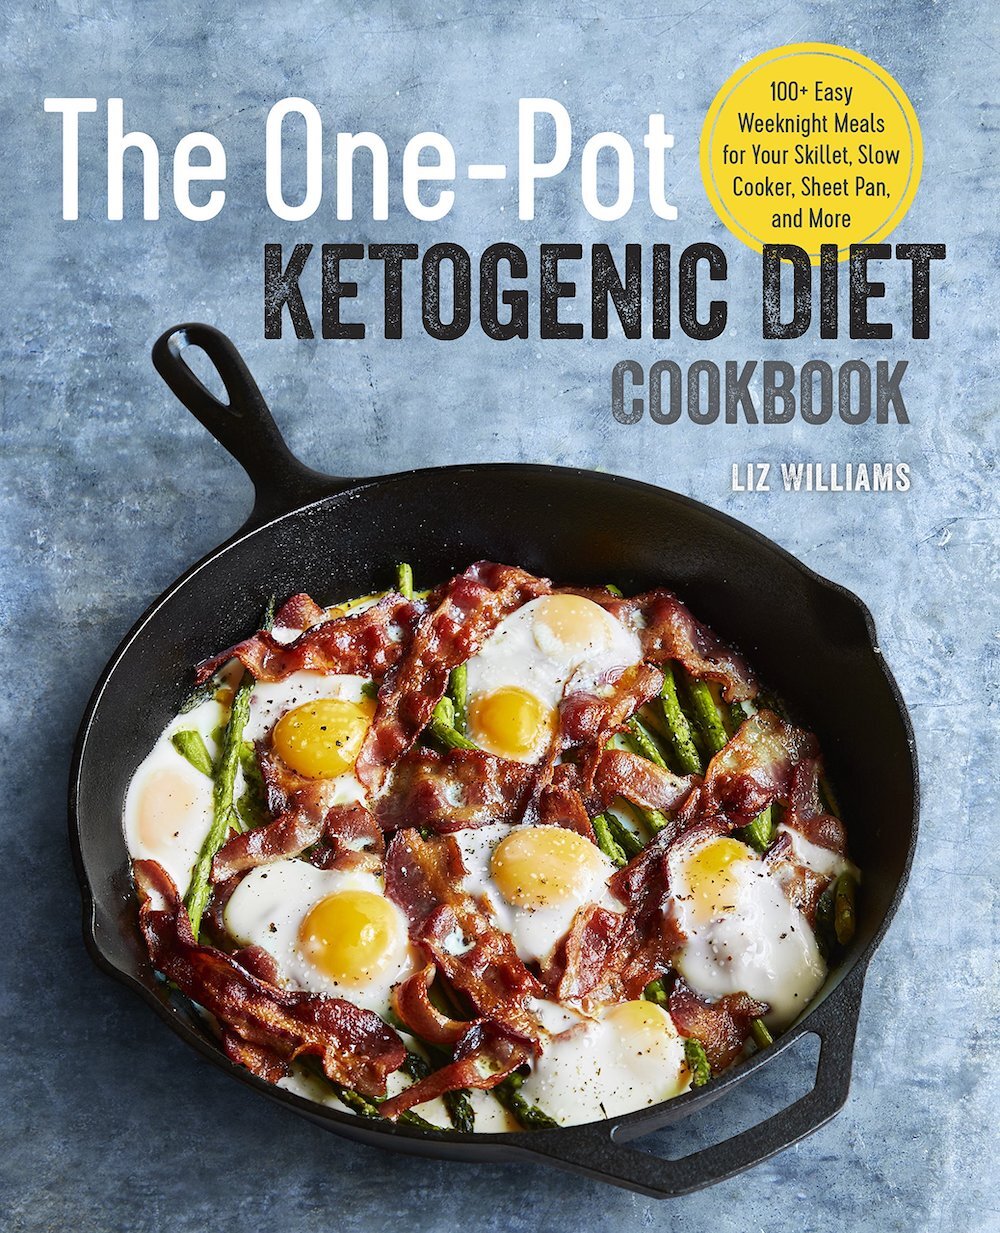 One-pot Ketogenic Diet Cookbook